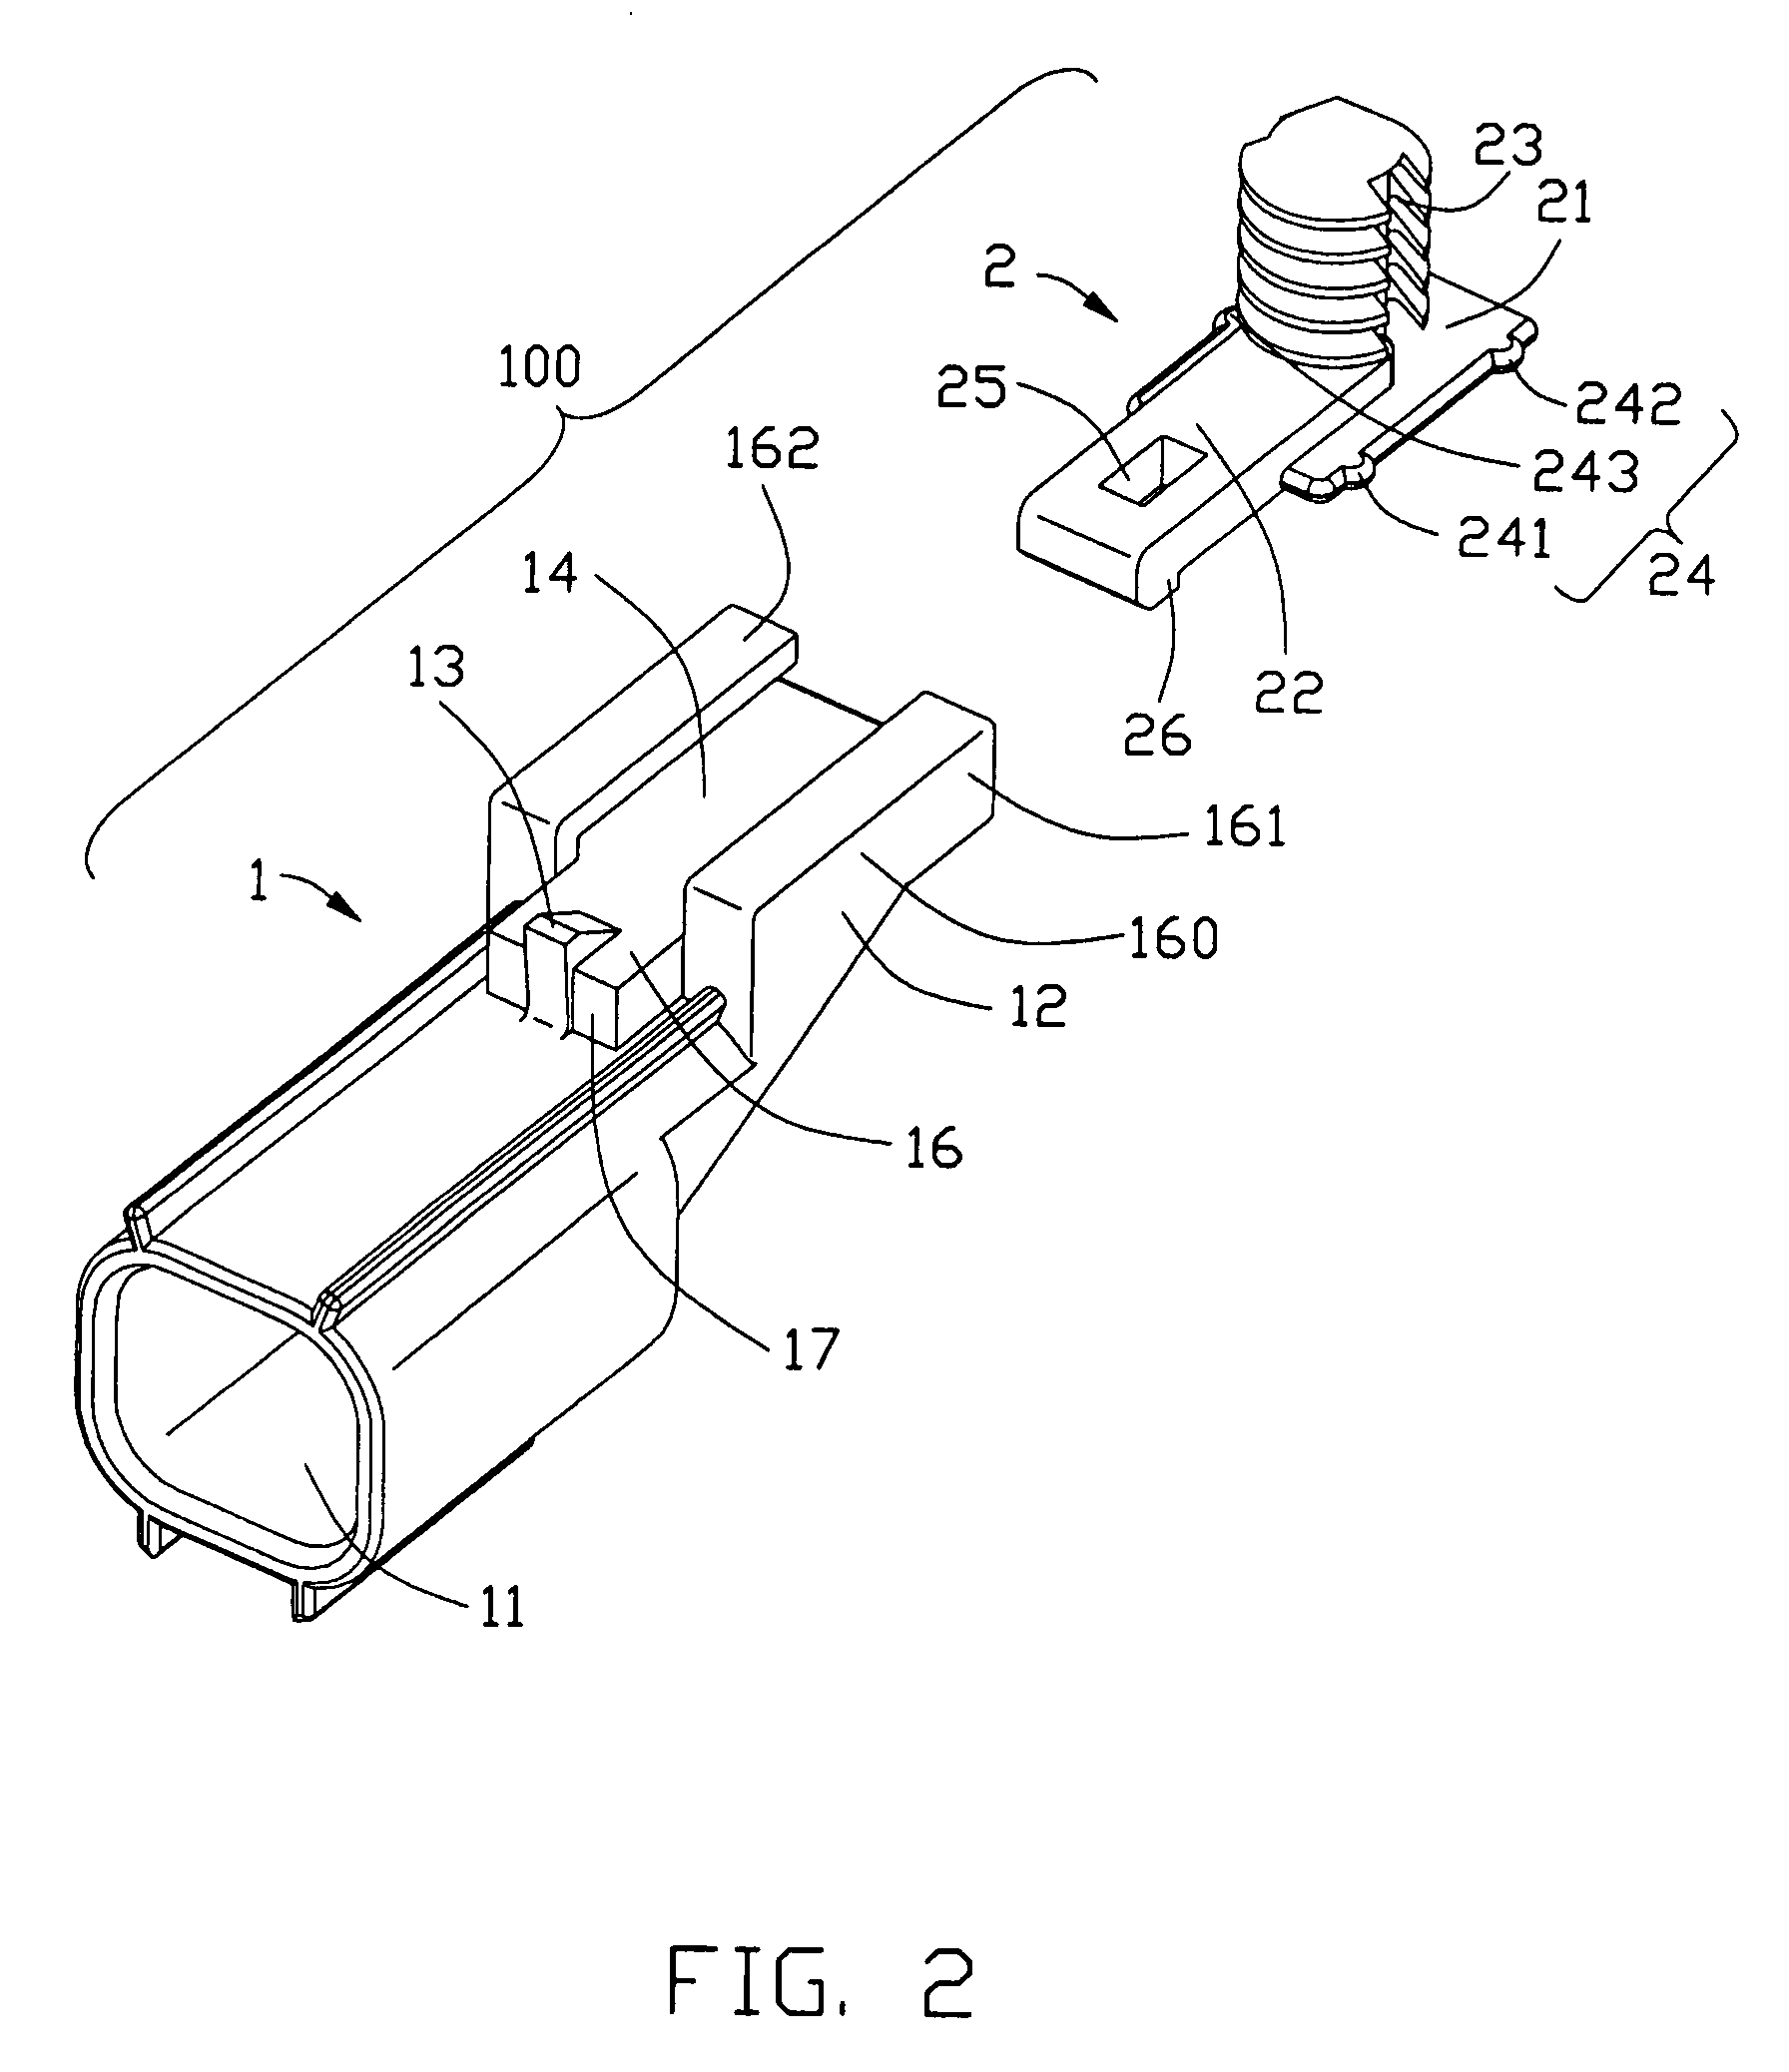 Electrical connector retaining mechanism having slide clip member